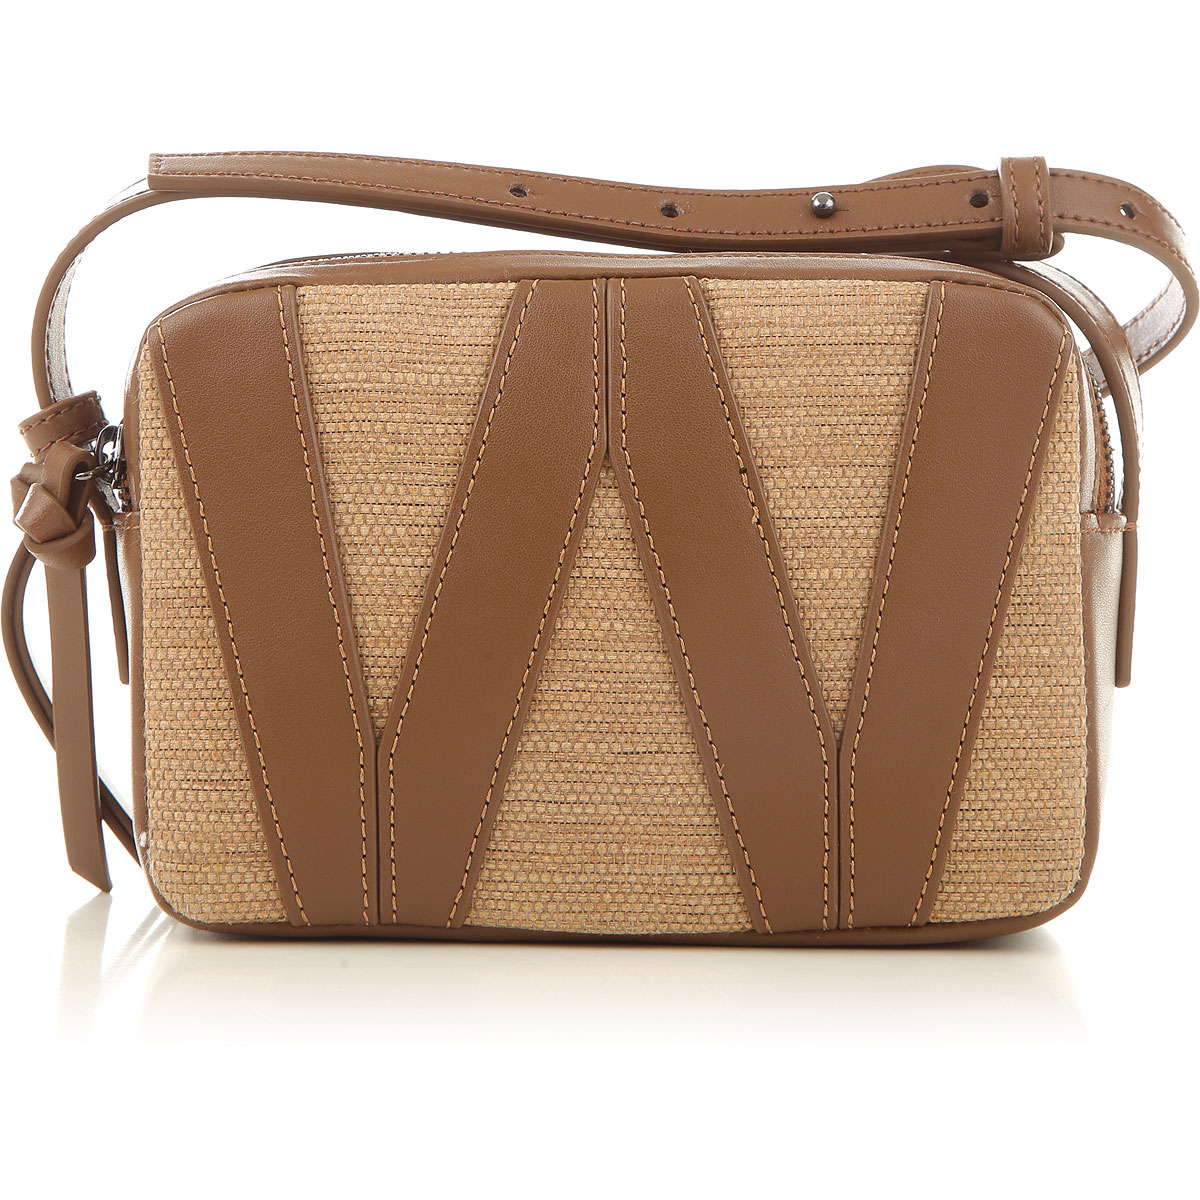 Handbags Max Mara, Style code: 55111614-esposito-001